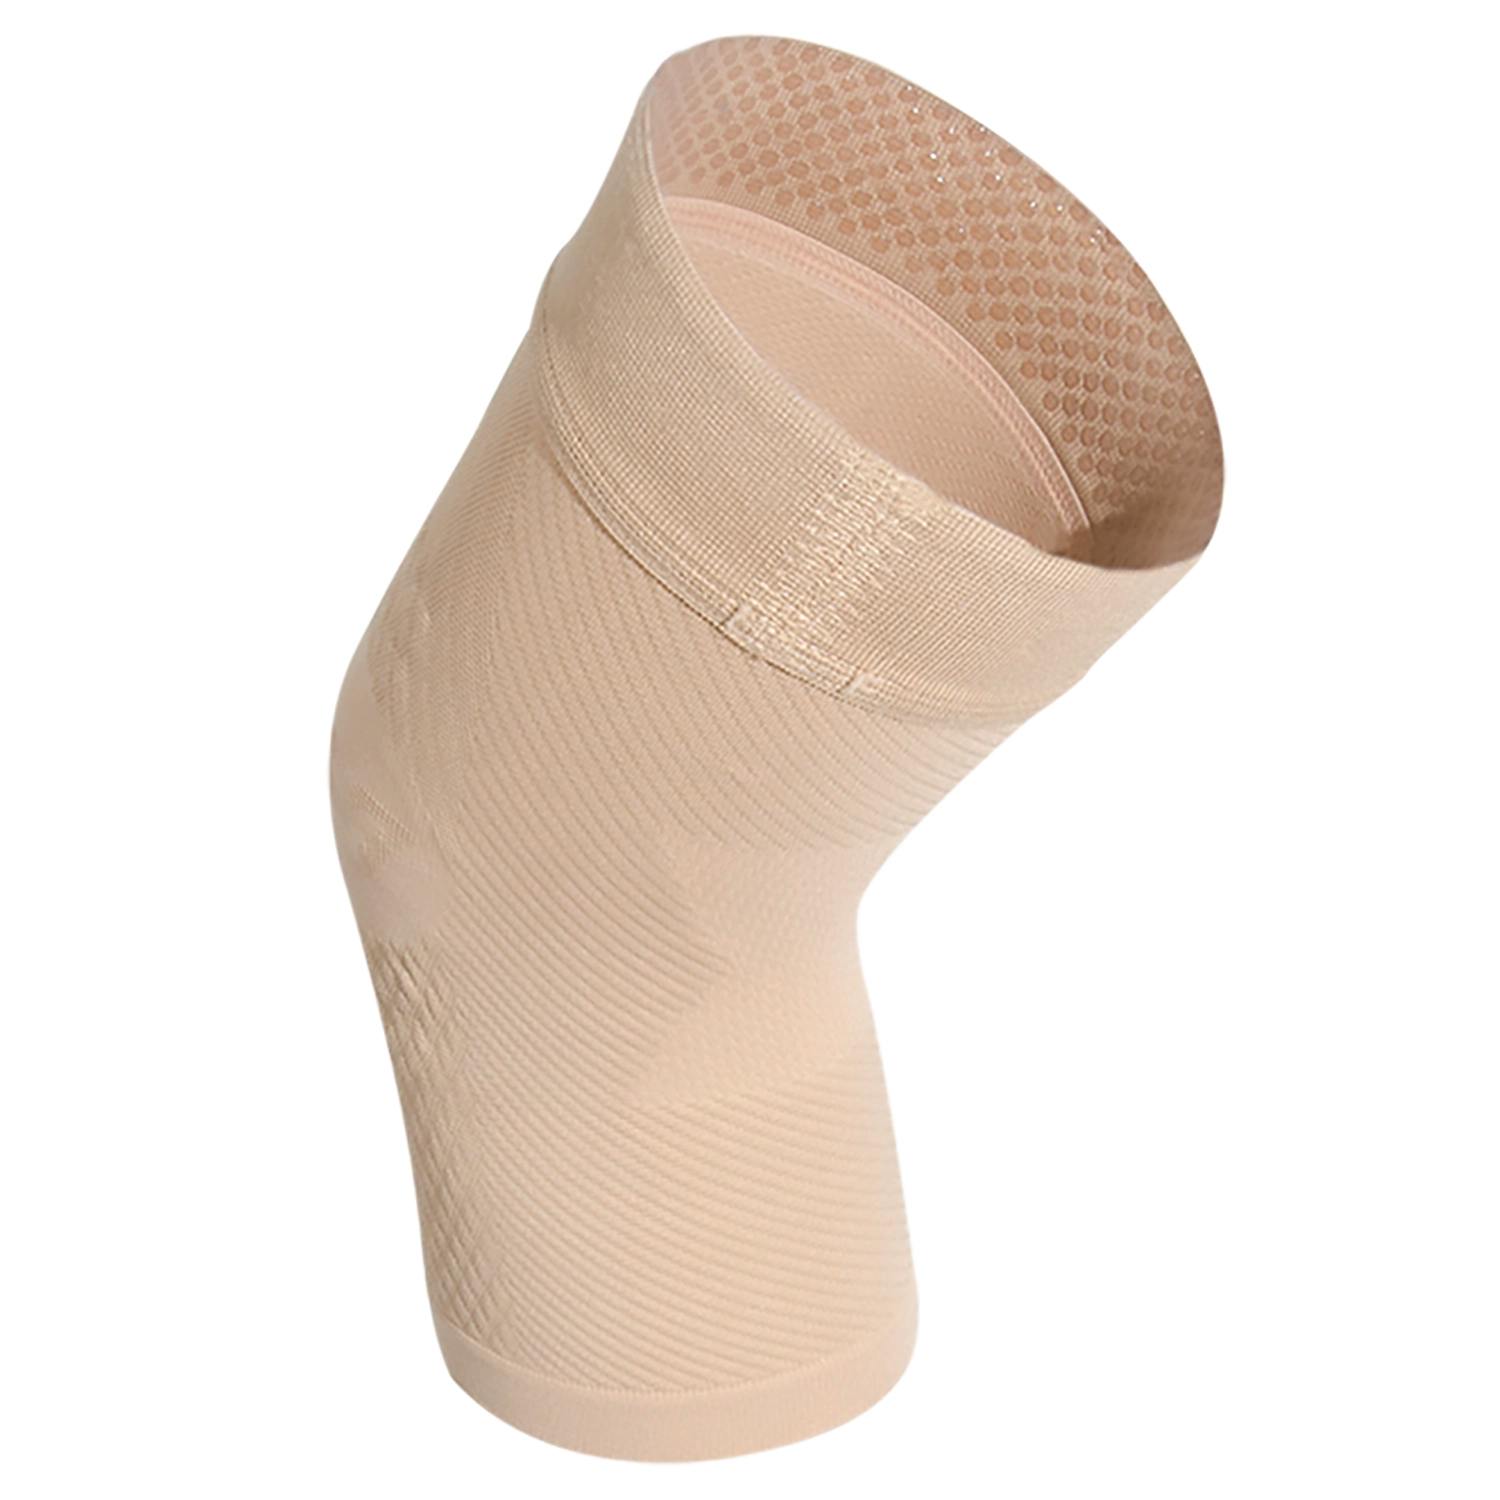  OrthoSleeve Orthopedic Brace for Arthritis, Tendinitis, ACL,  MCL, Injury Recovery, Meniscus Tear, knee pain, aching knees, patellar  tendonitis and arthritis (Small, Tan, Single) : Health & Household